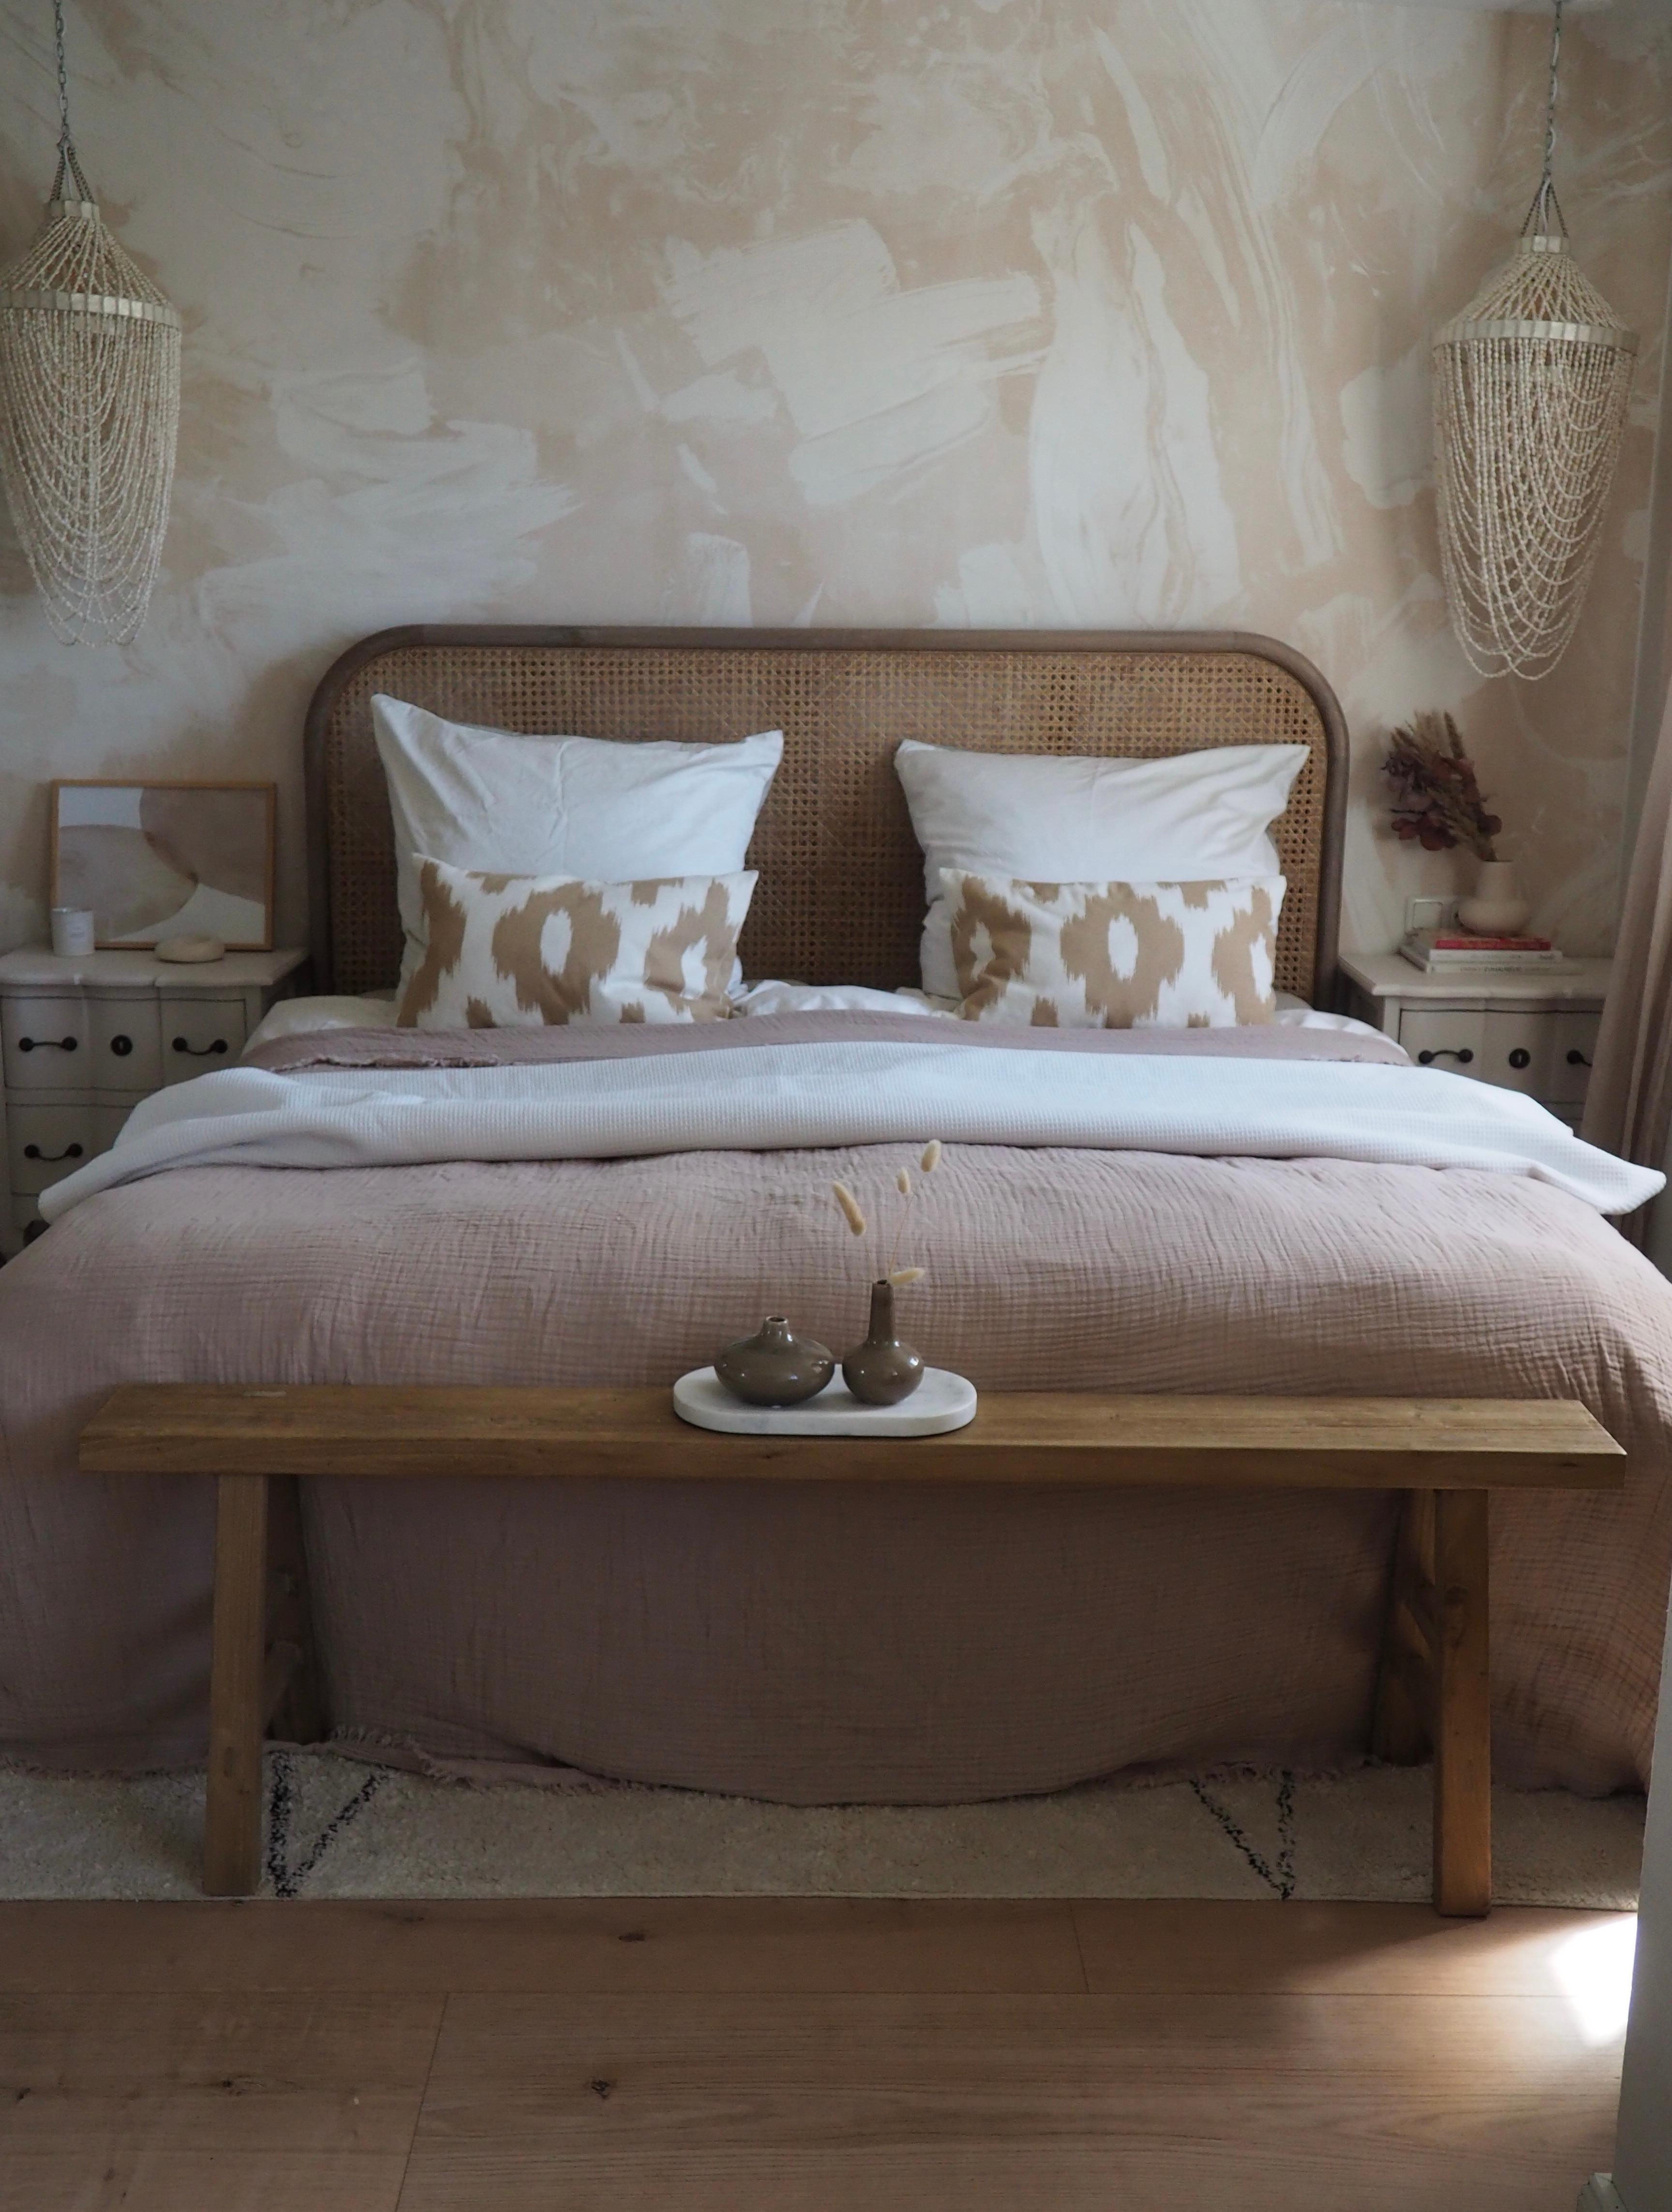 #schlafzimmer #bedroom #schlafzimmerideen #cozy #COUCHstyle #couchmagazin